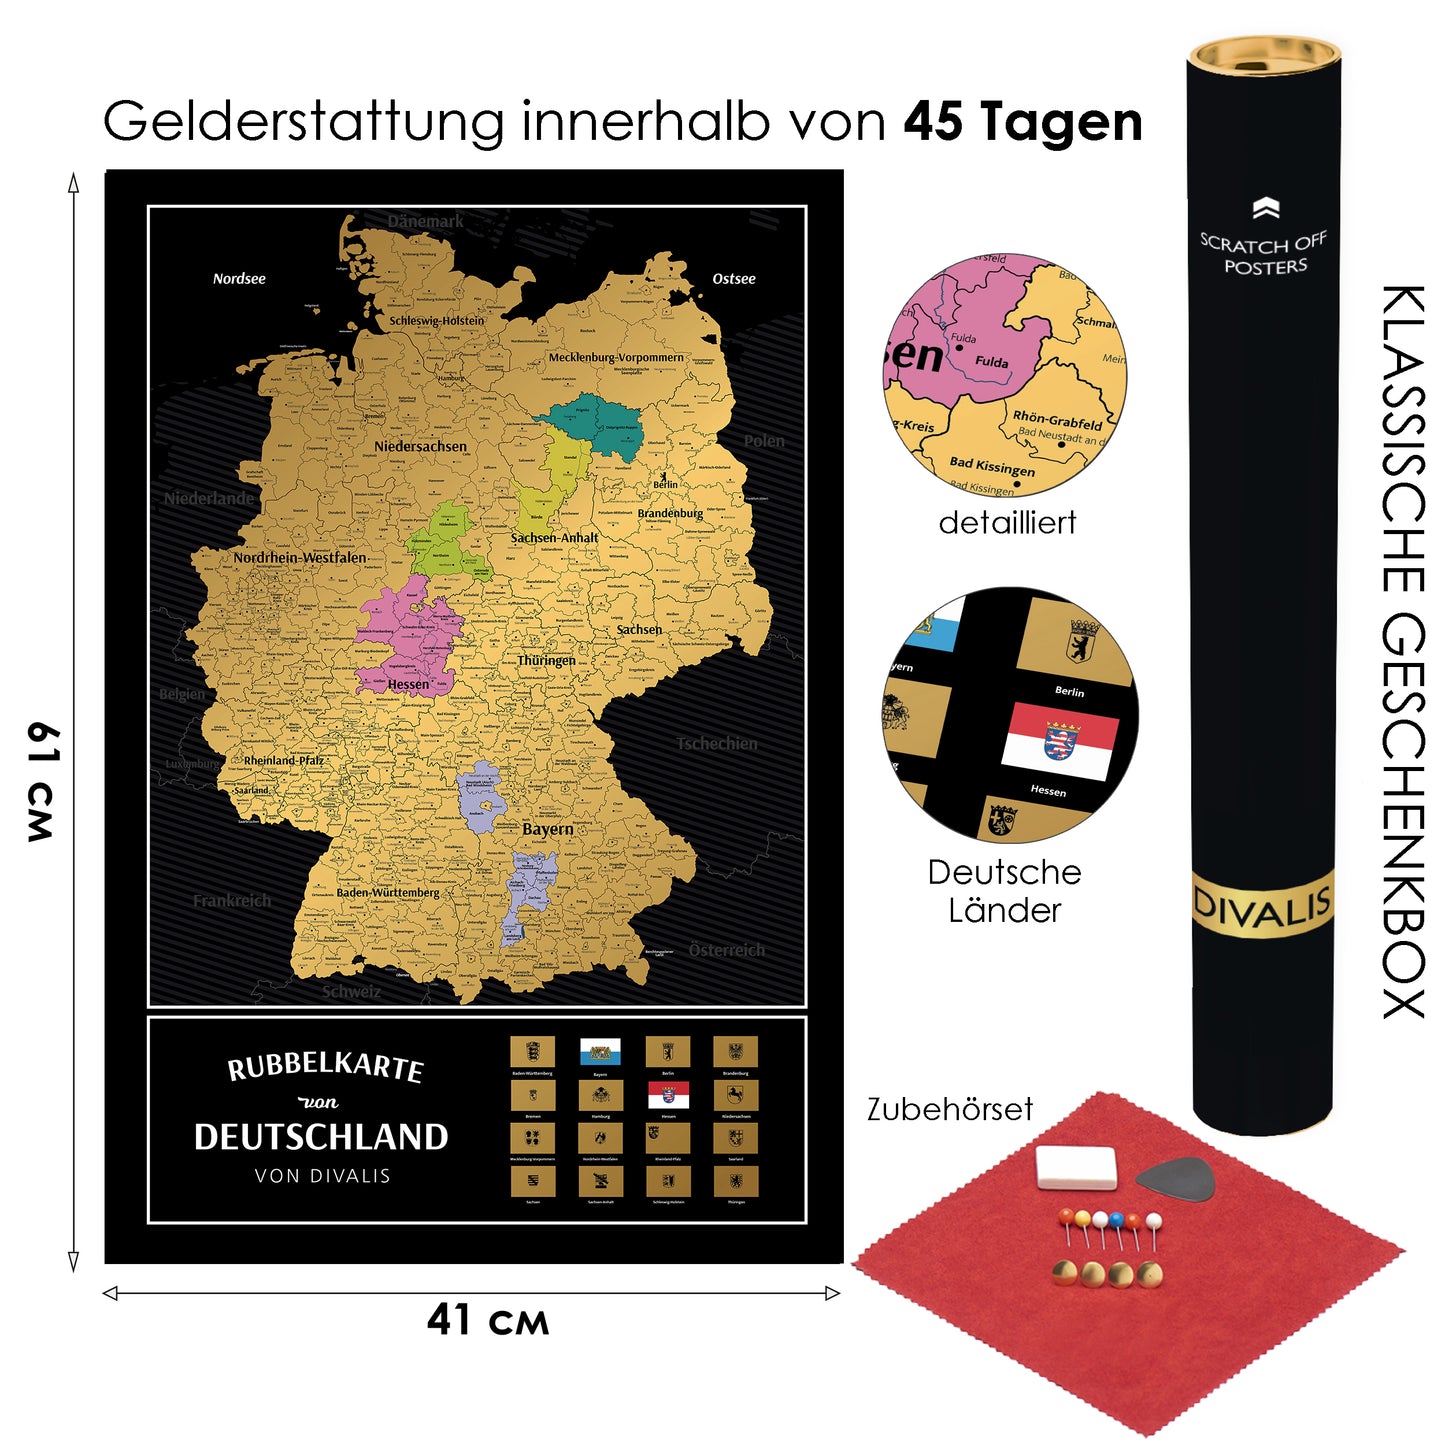 Scratch off Map Germany - Deutschlandkarte Poster 61x41 cm - Scratch Germany Map Gift - Landkarte zum Rubbeln Deutschland - Black and Gold Scratch off Germany Map Poster - Weltkarte zum Rubbeln Deutsch - Rubbeldeutschlandkarte Geschenk